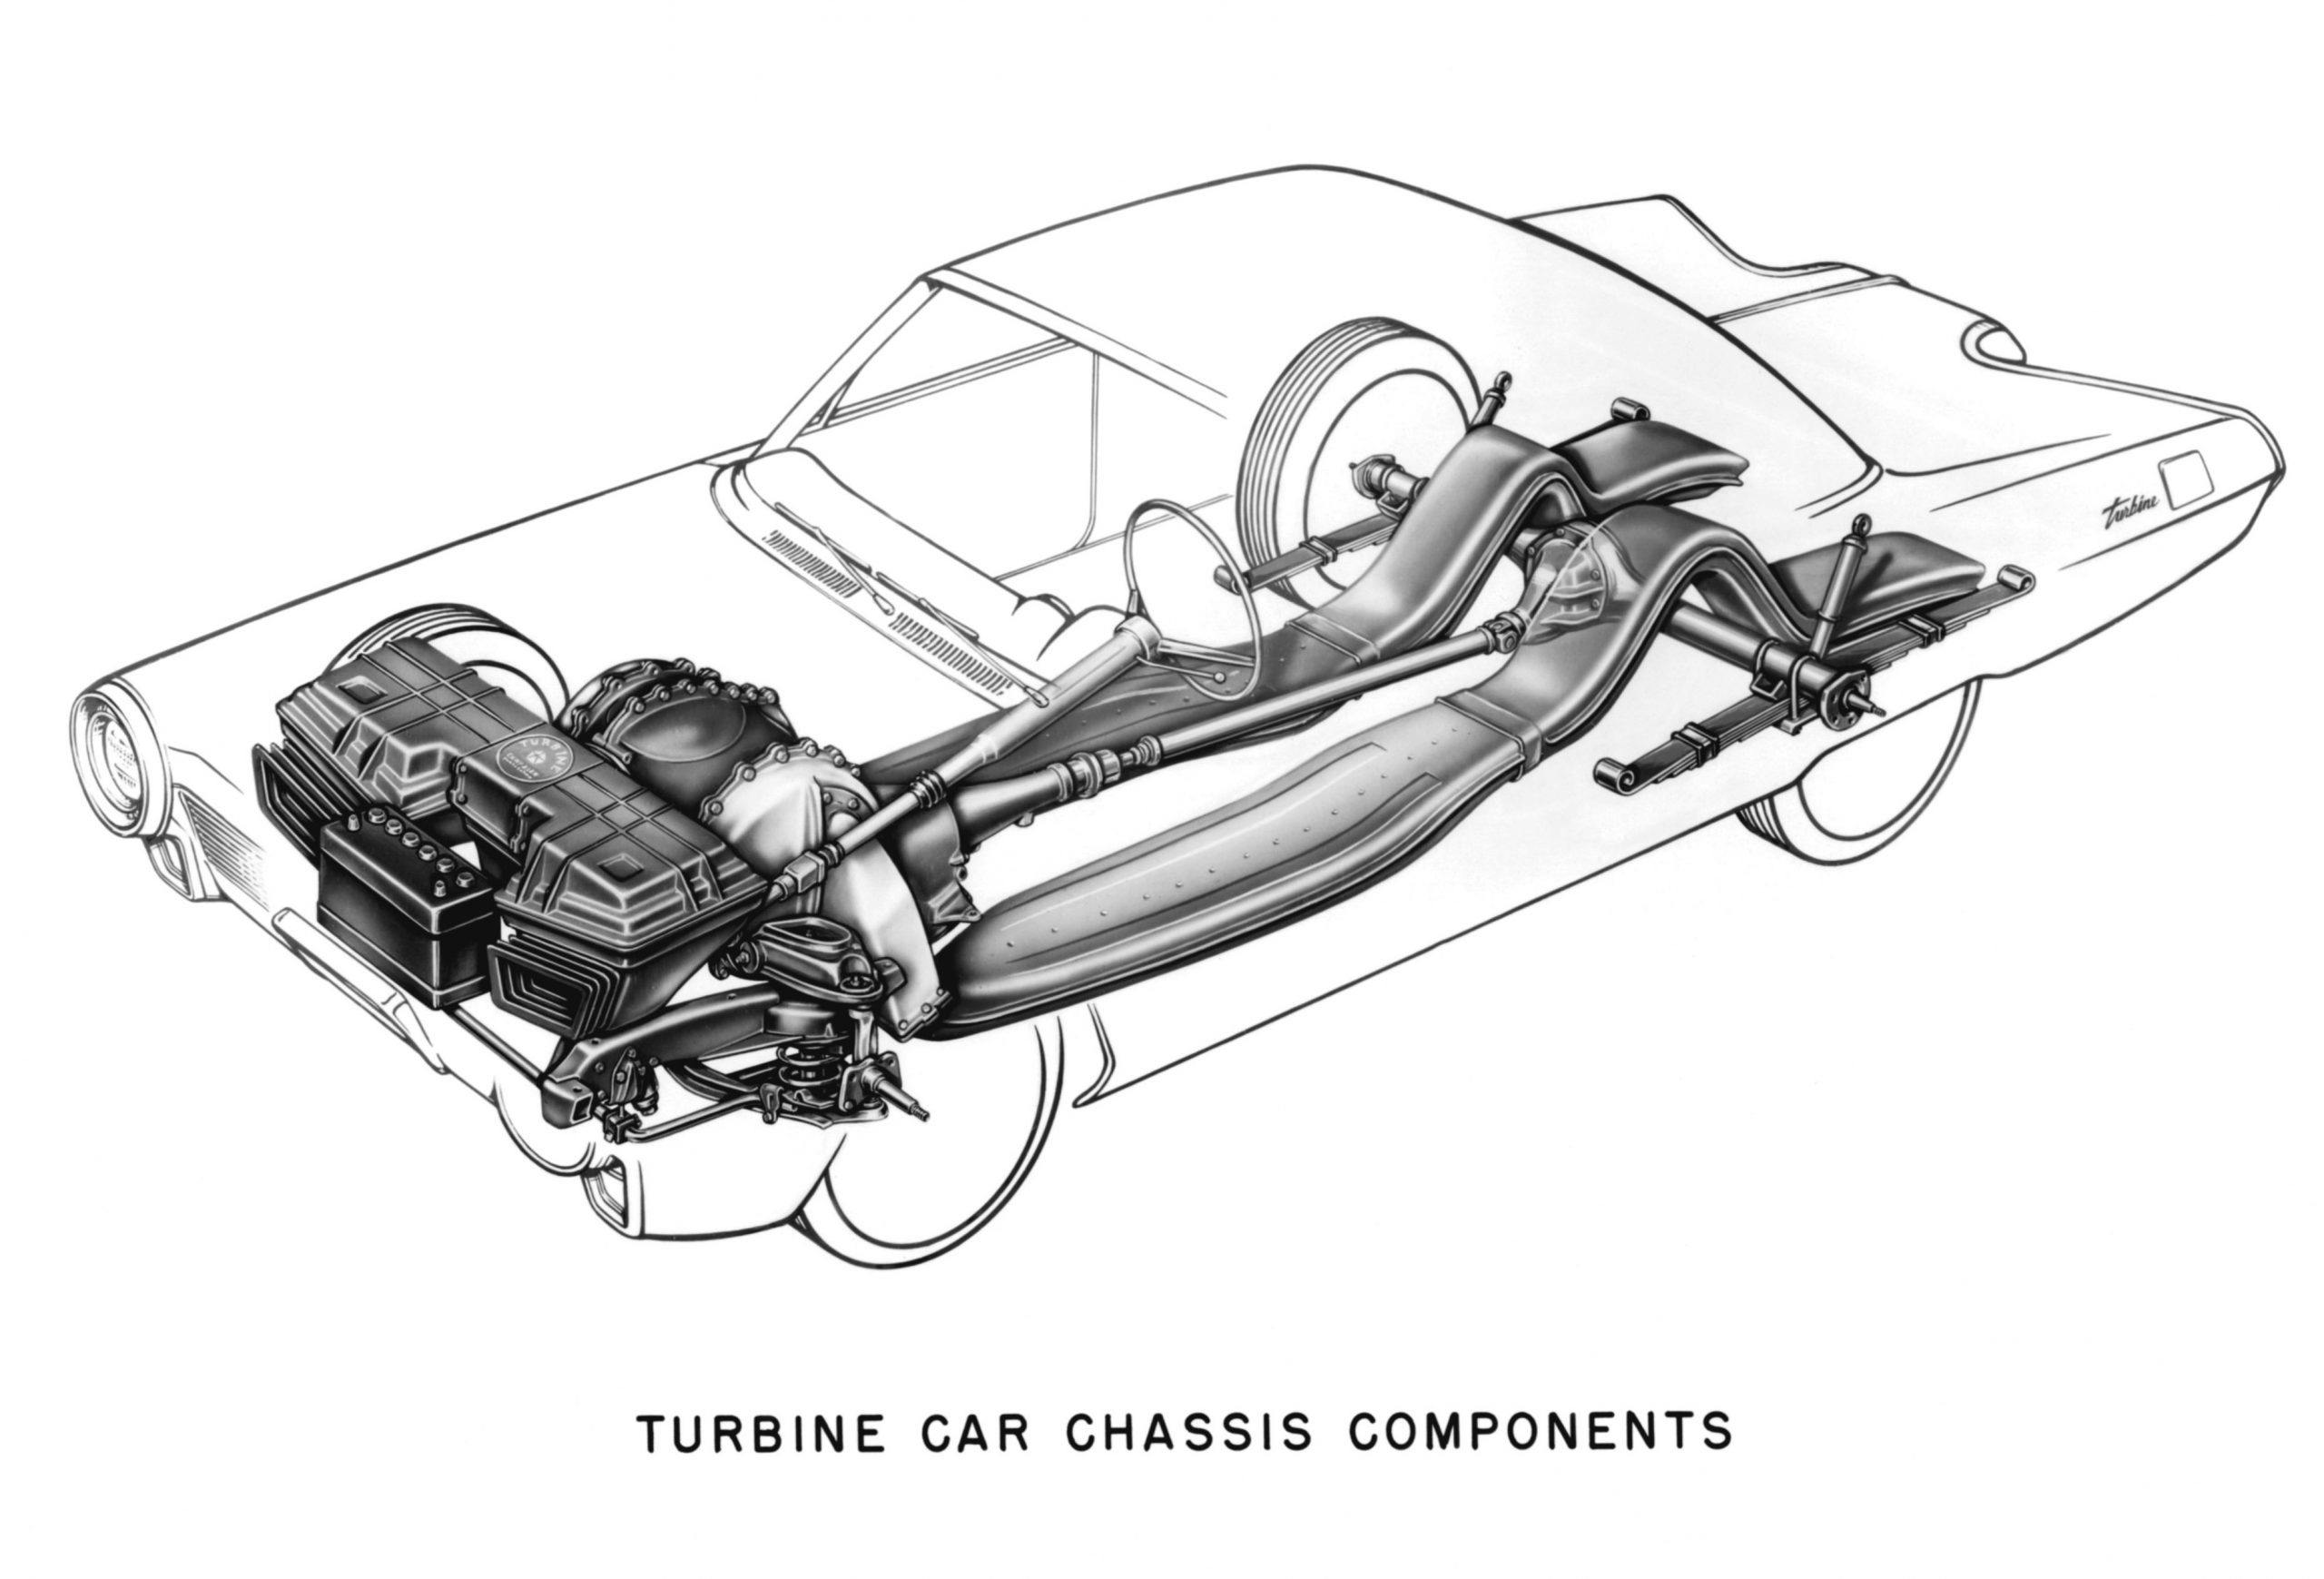 Chrysler Turbine history - 1963 Chrysler Turbine cutaway